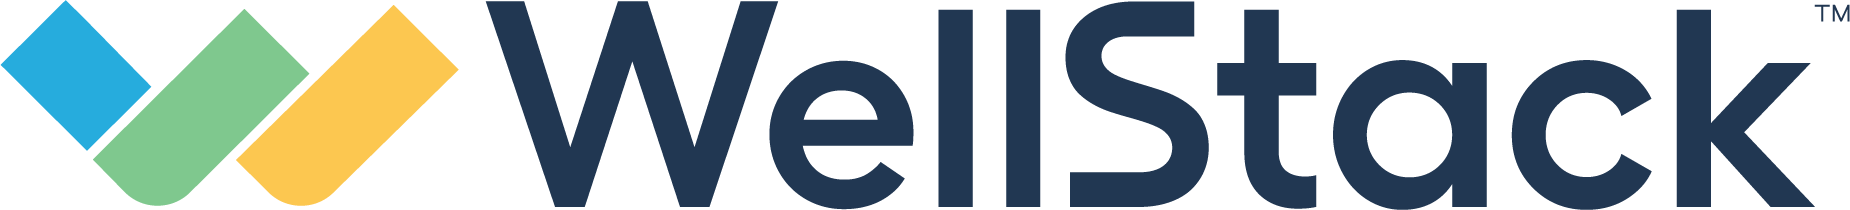 WellStack Logo_CMYK